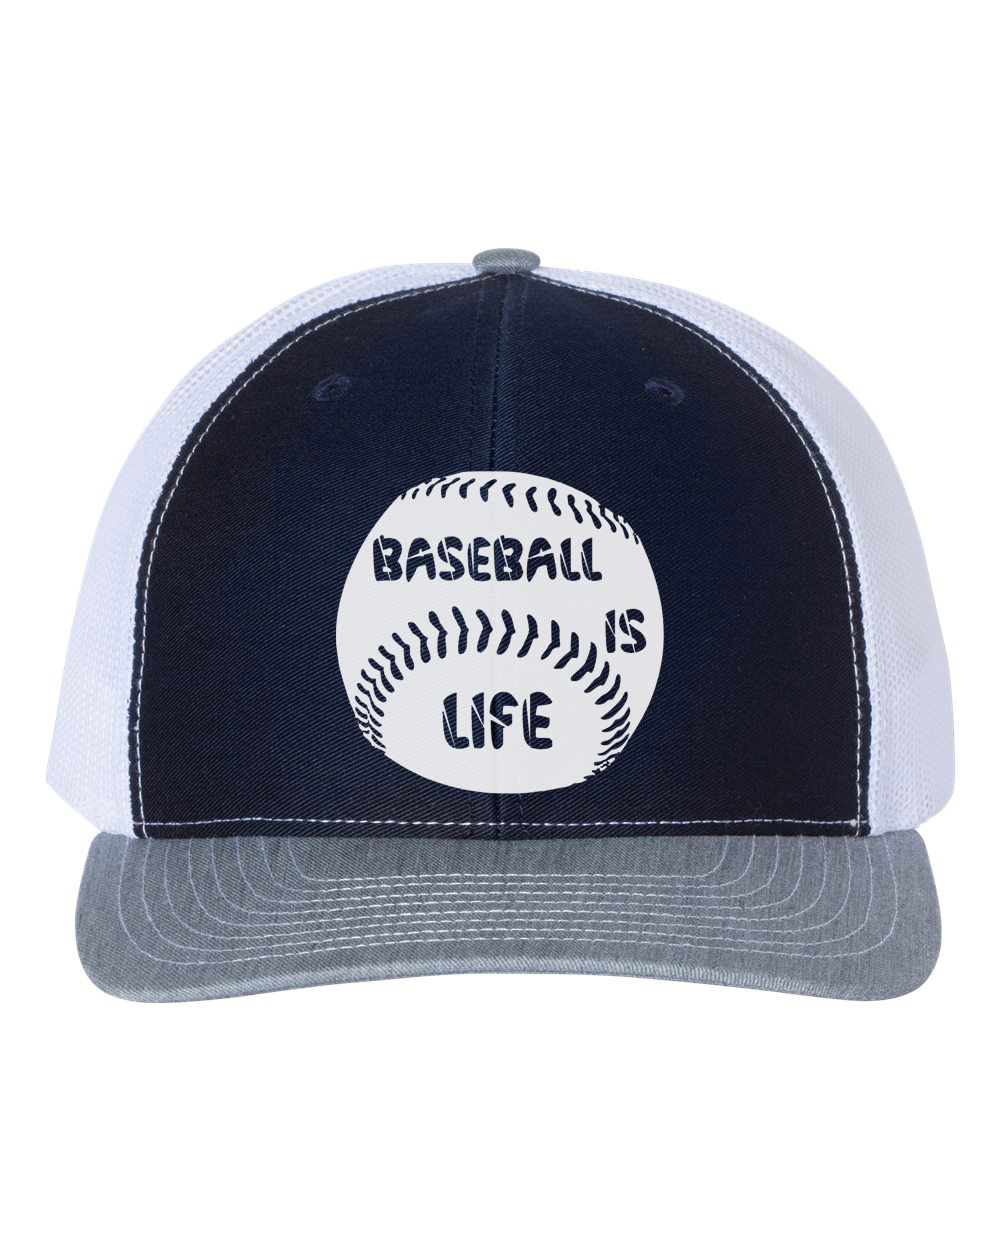 Baseball Is Life, Baseball Hat, Baseball Cap, Trucker Hat, Baseball Gear, Baseball Lover, Sports Hat, Snapback, 10 Colors!, White Text, Navy/White/Heather - image 1 of 1